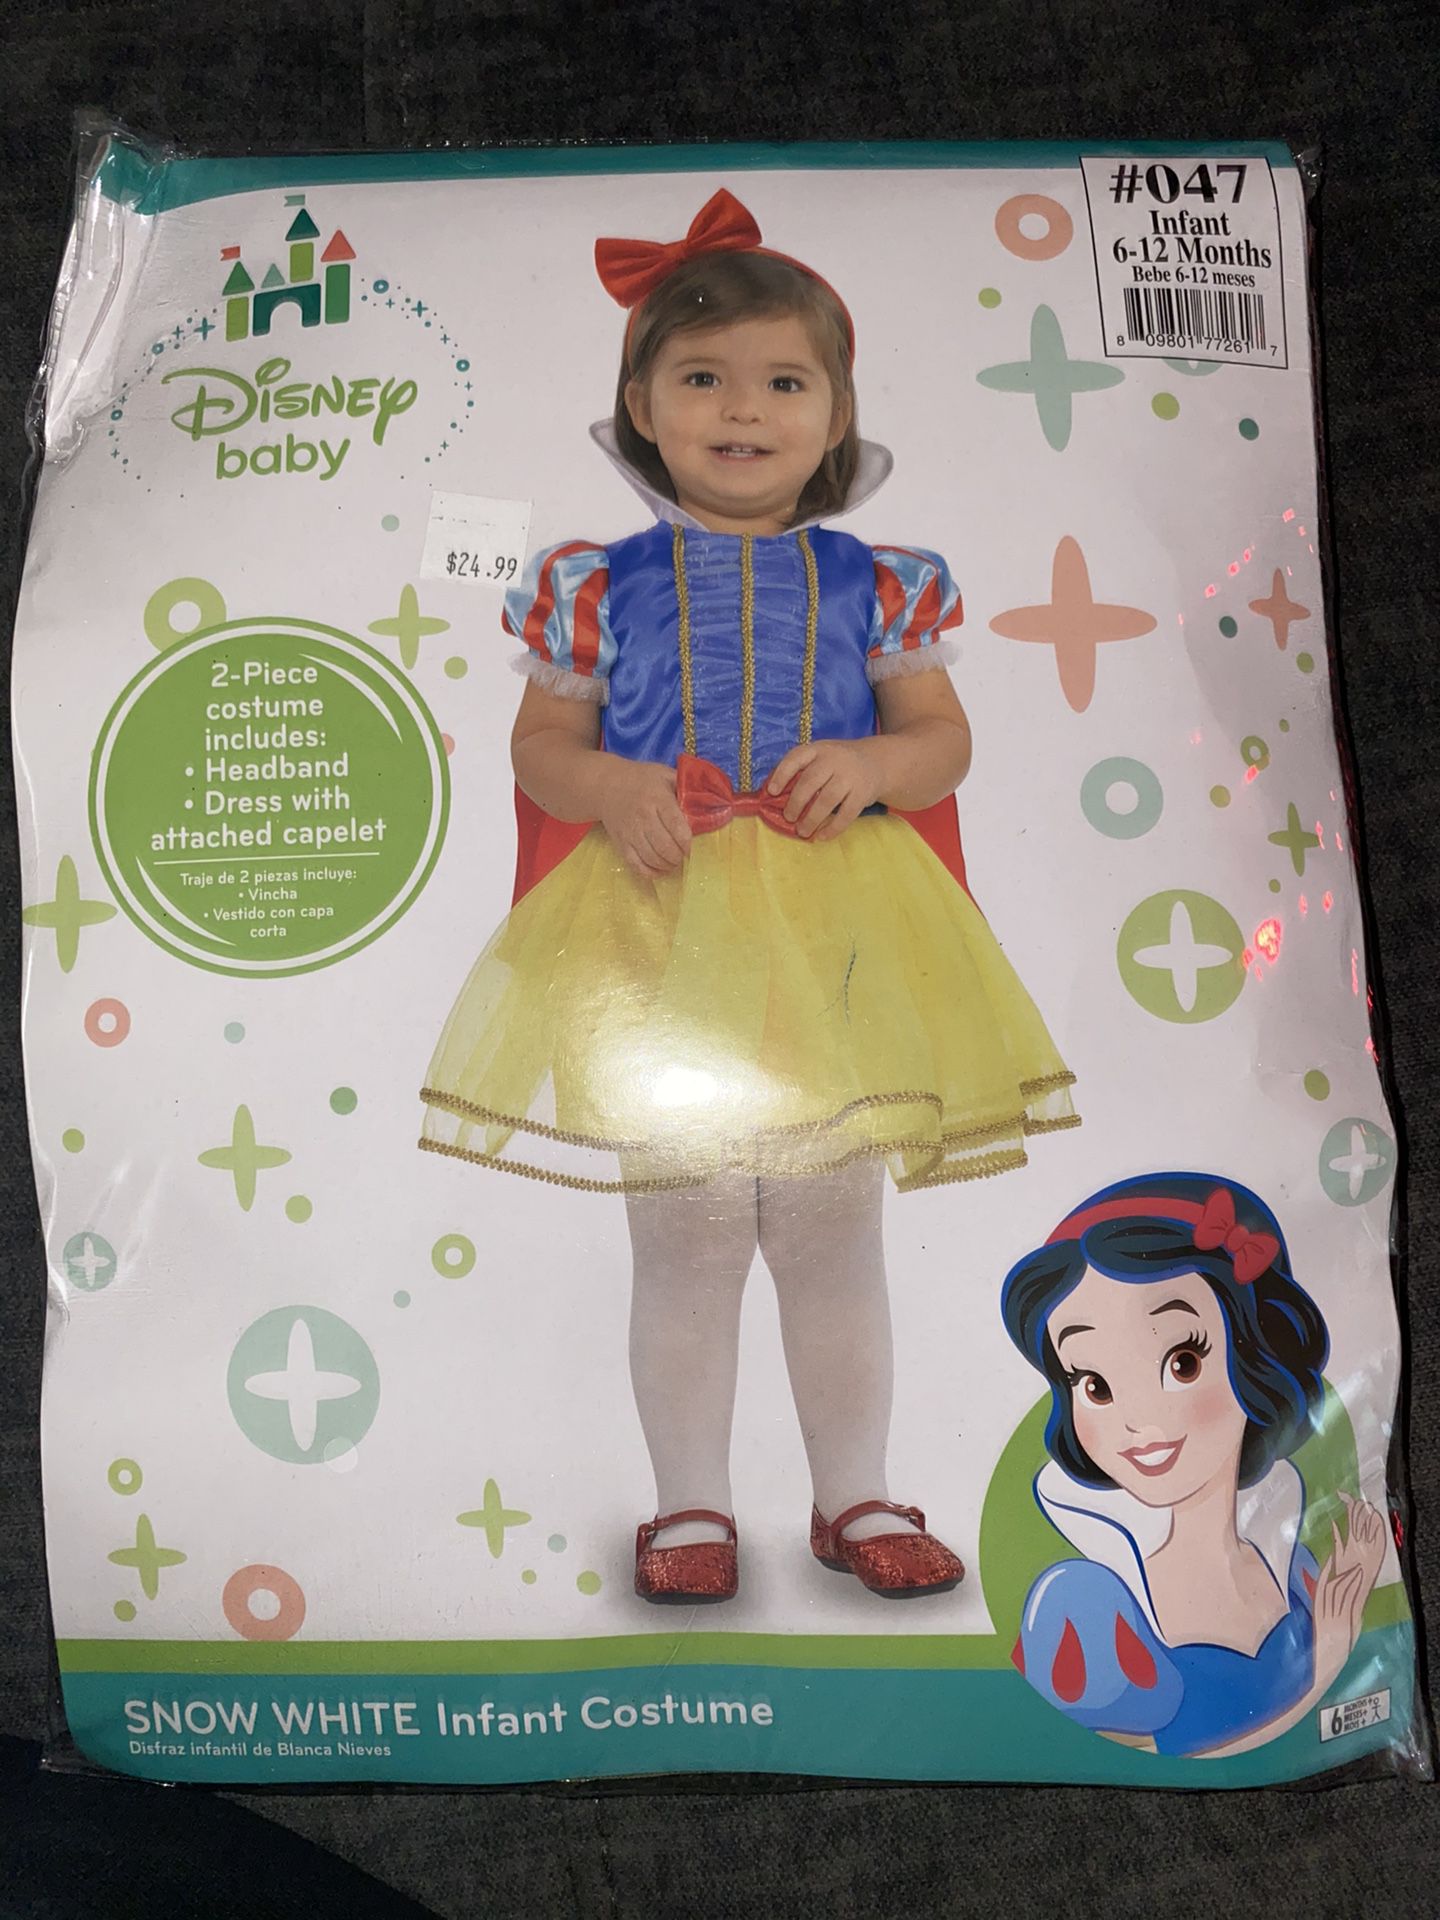 Snow White infant costume